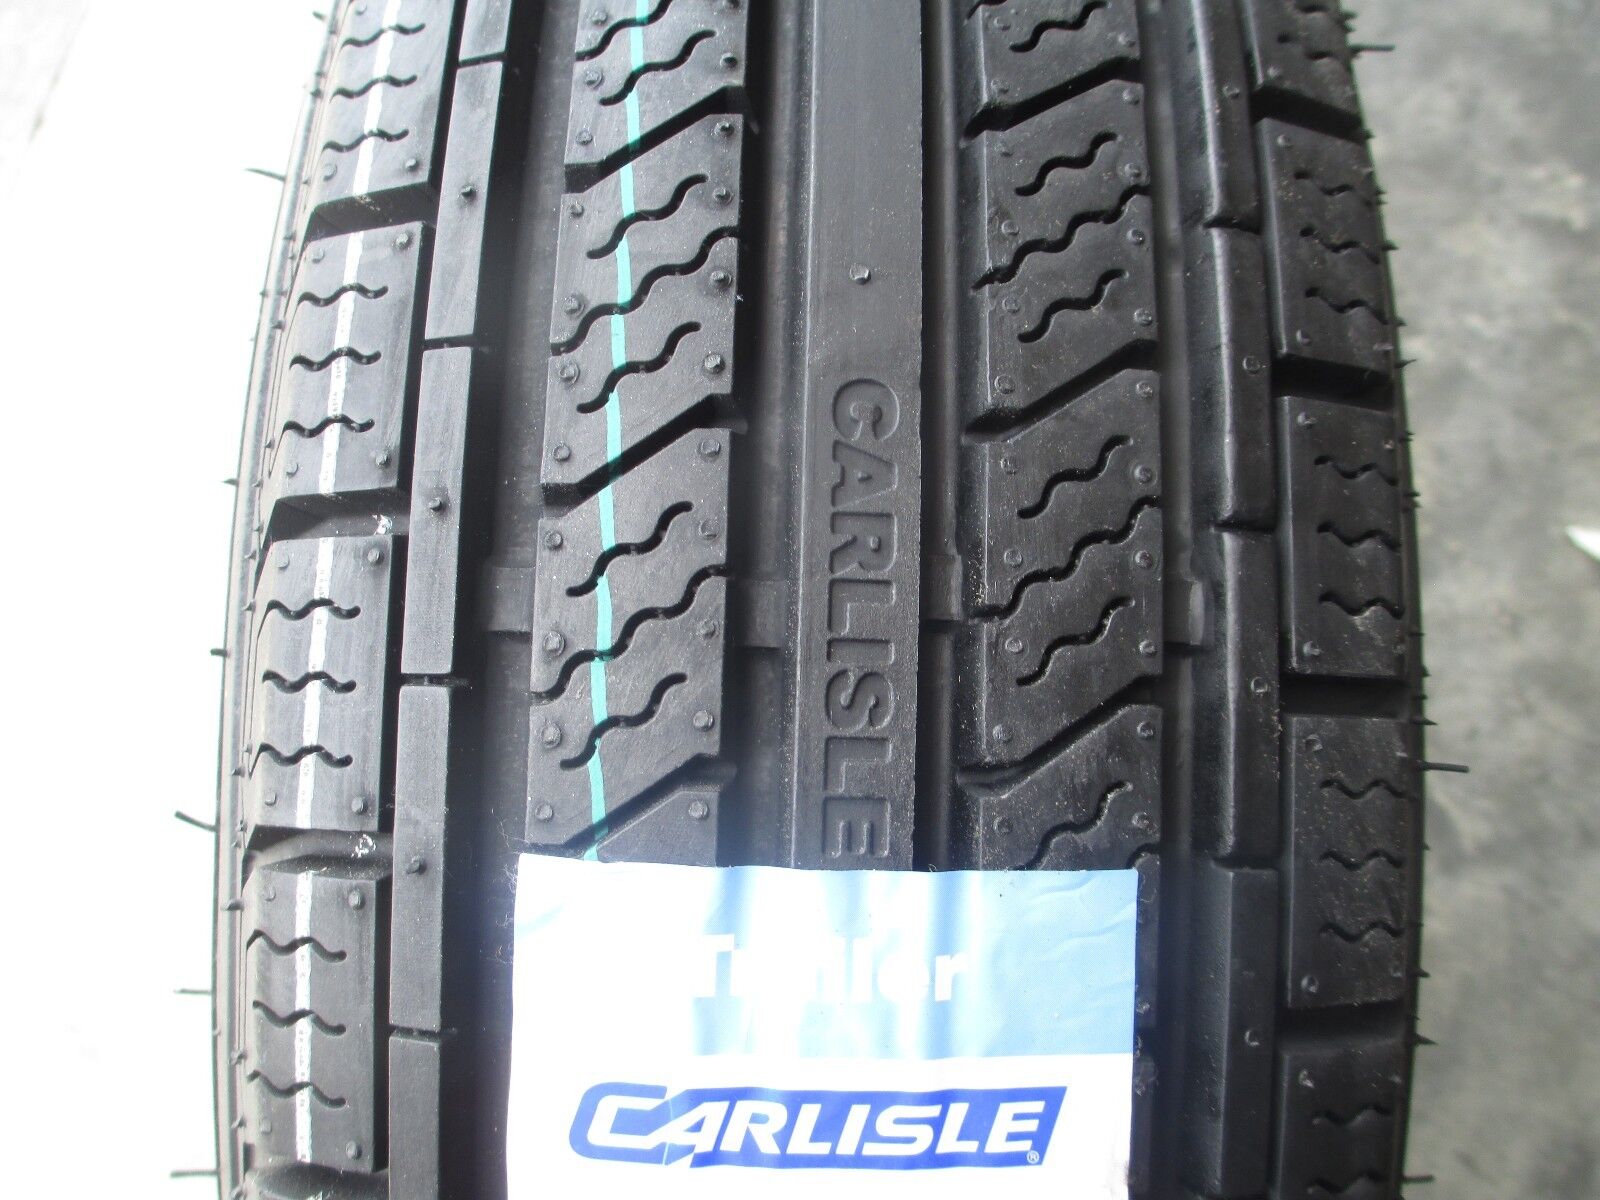 4 New ST 225/75R15 Carlisle Radial HD Trailer Tires 10 Ply 2257515 75 15 R15 E